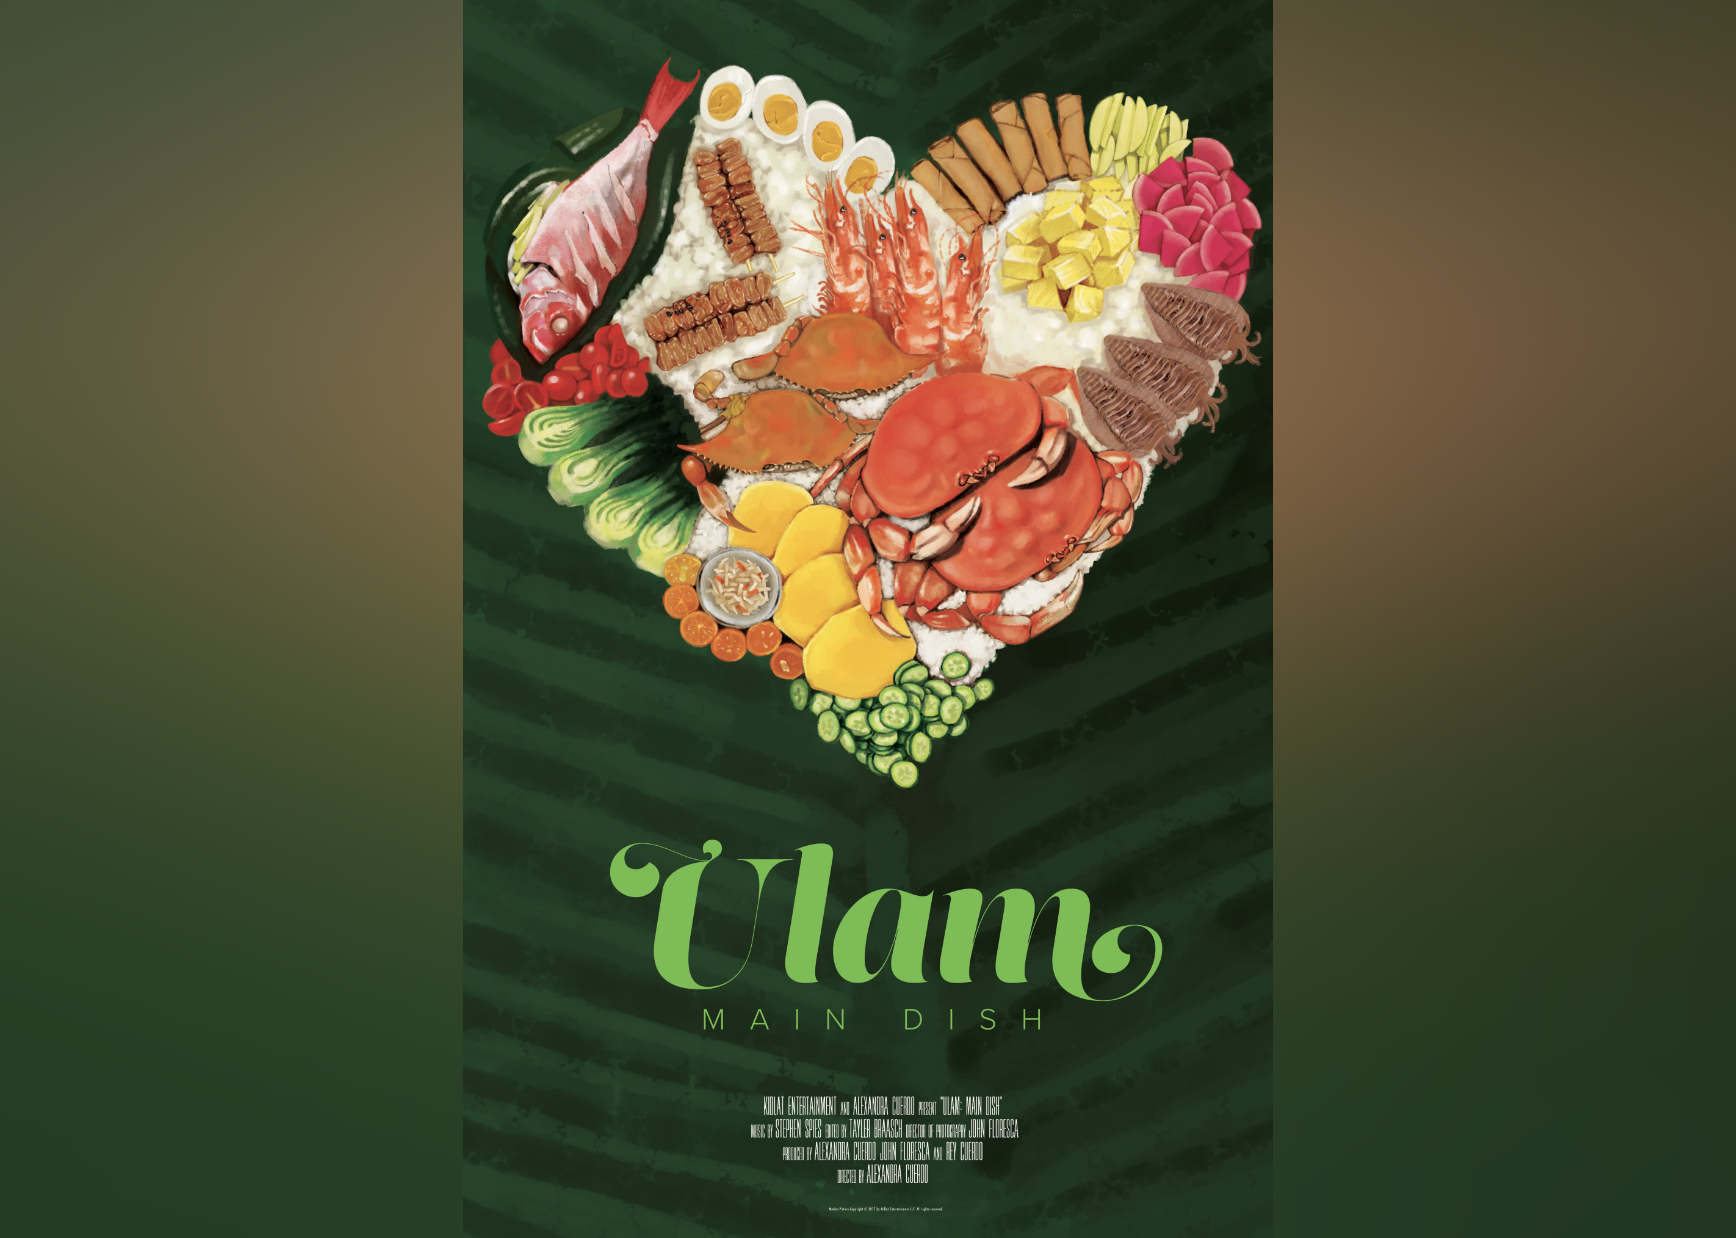 The artwork for the film "Ulam: Main Dish".